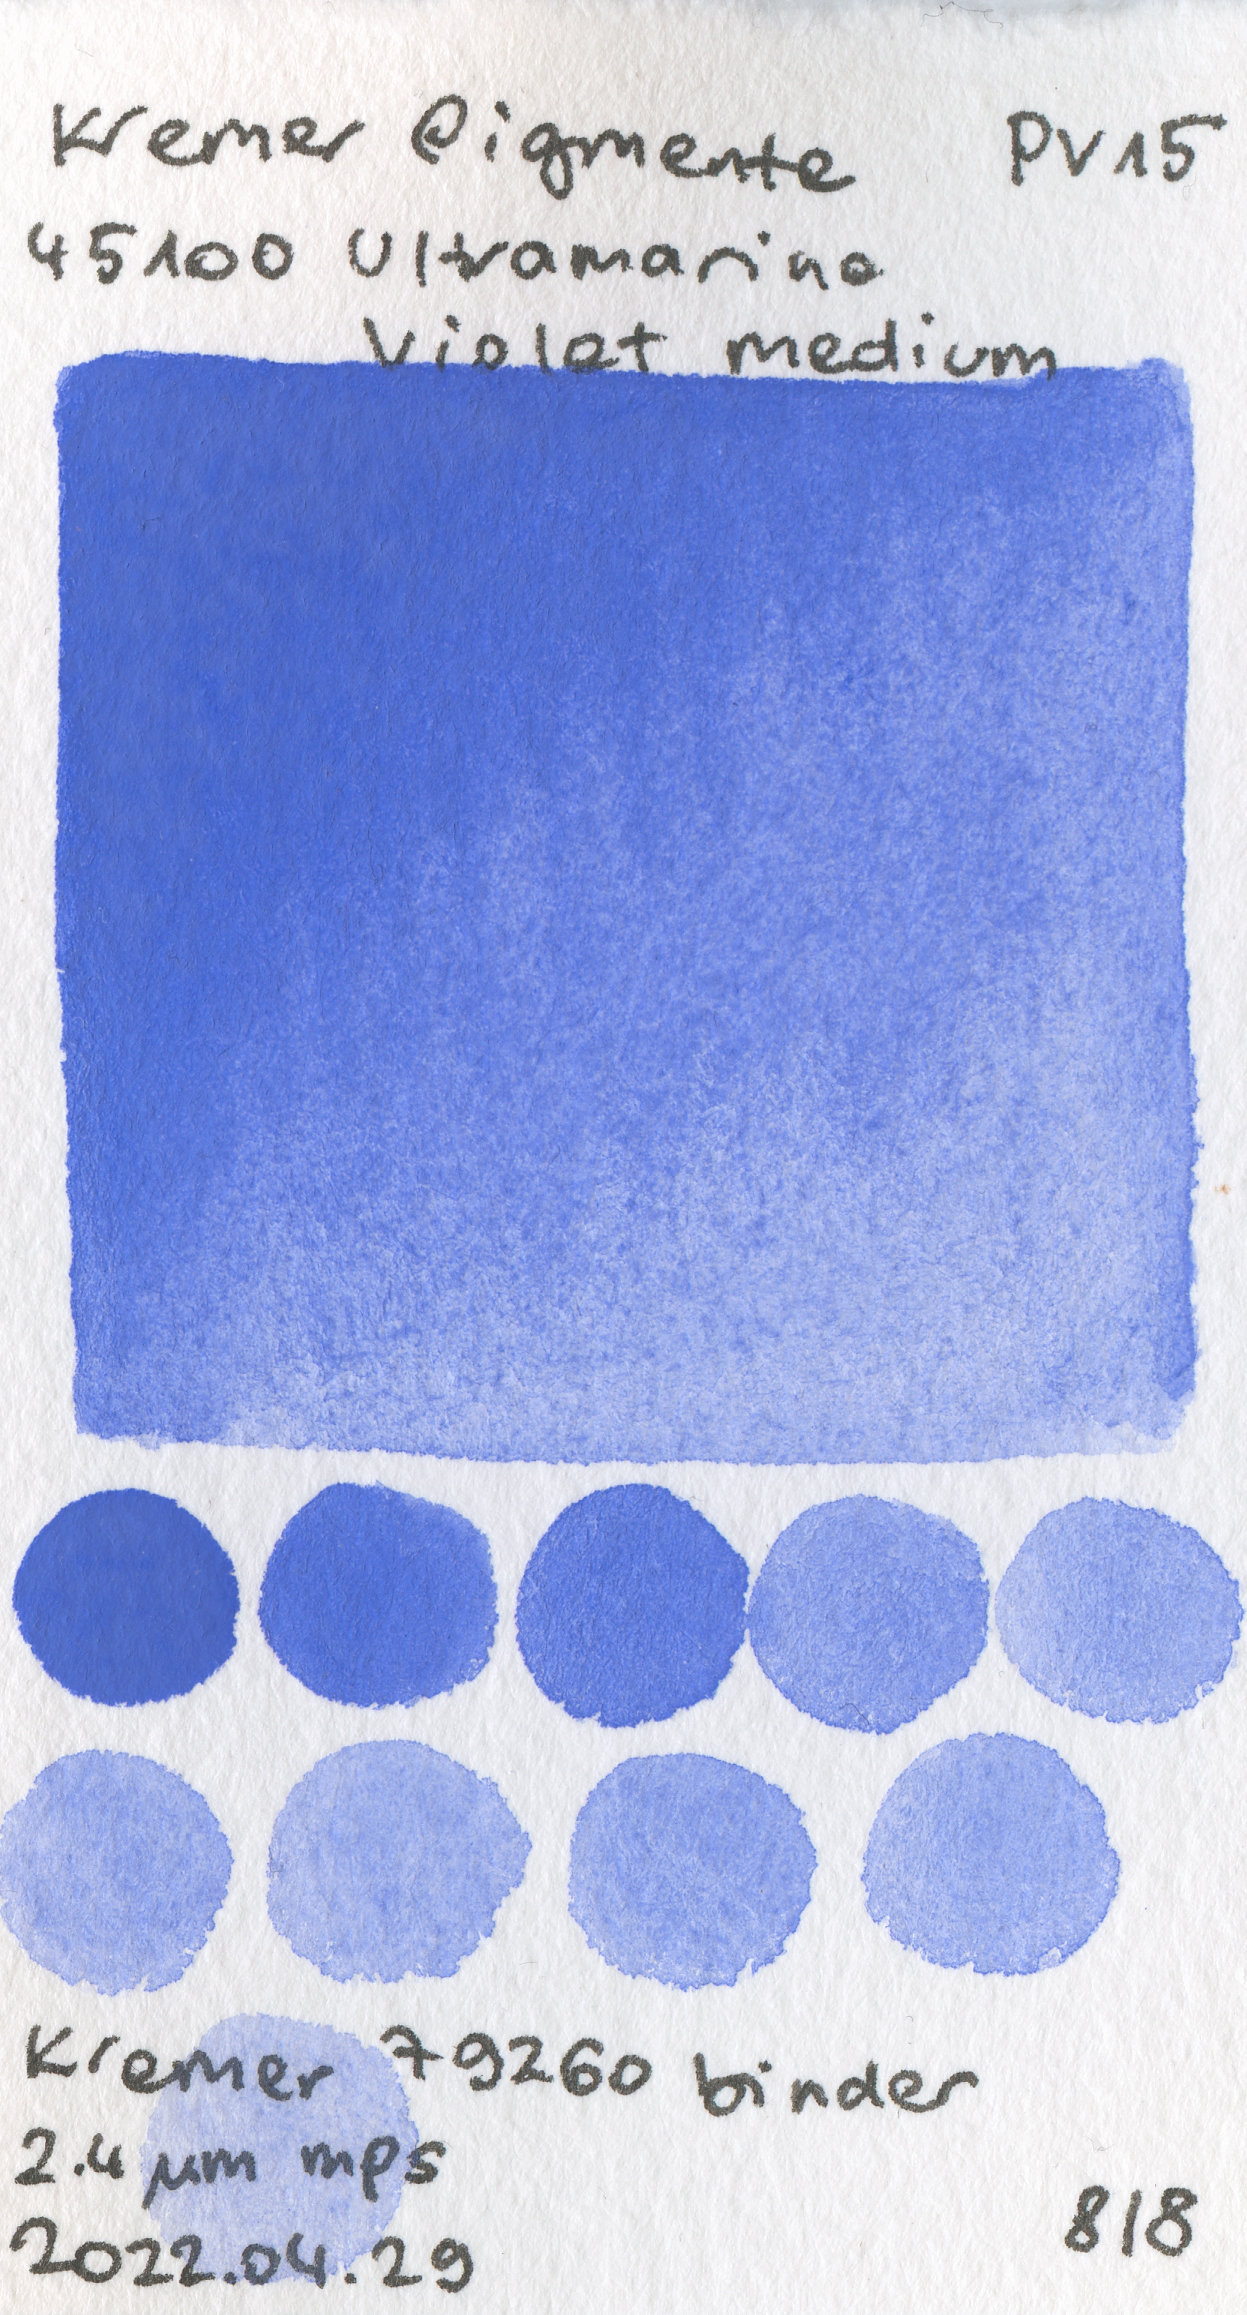 Kremer Pigmente [Dry] Pigments 45100 Ultramarine Violet, medium PB29 watercolor swatch